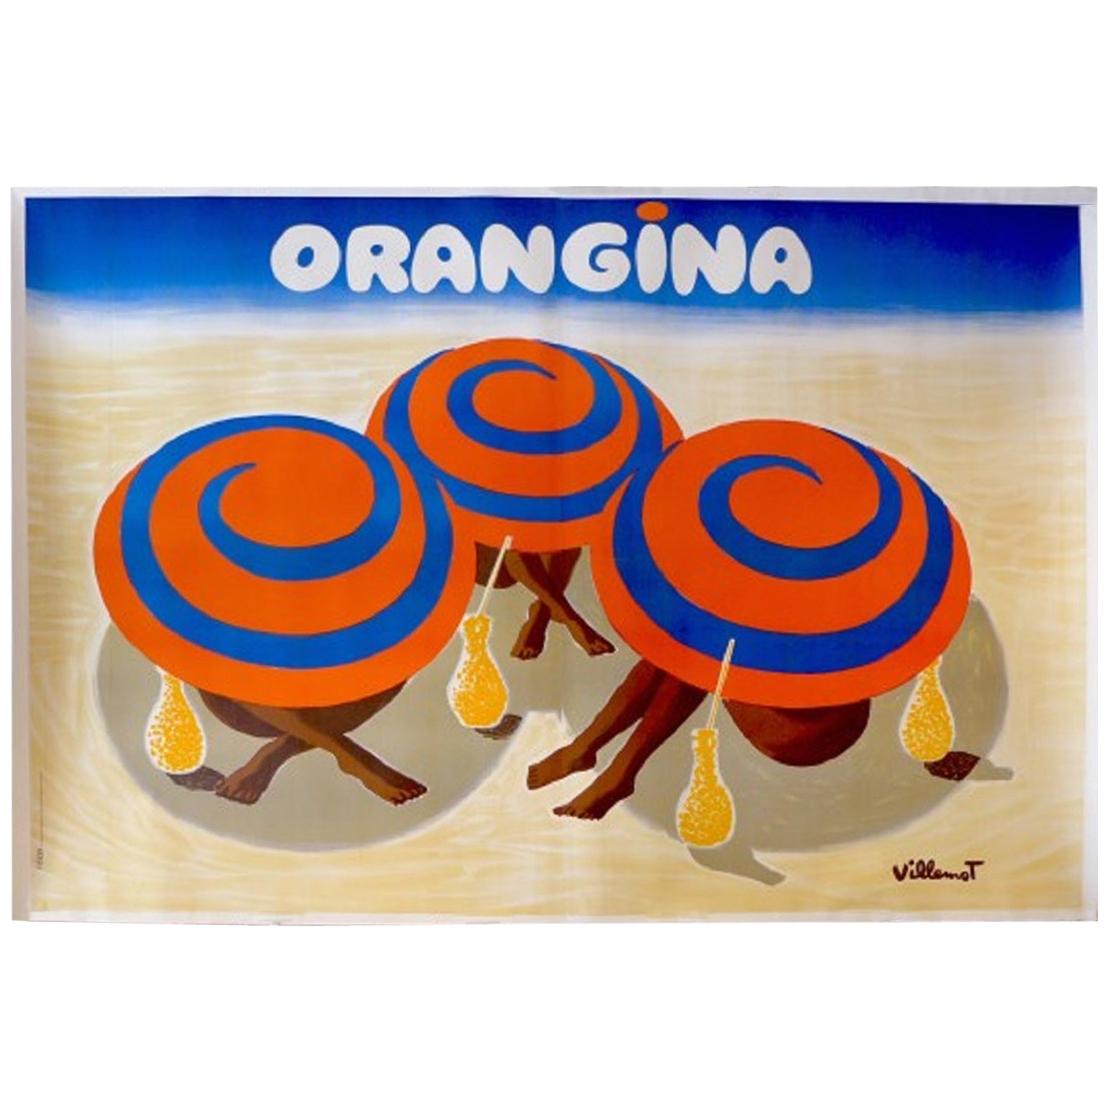 Orangina Umbrellas – Villemot Poster